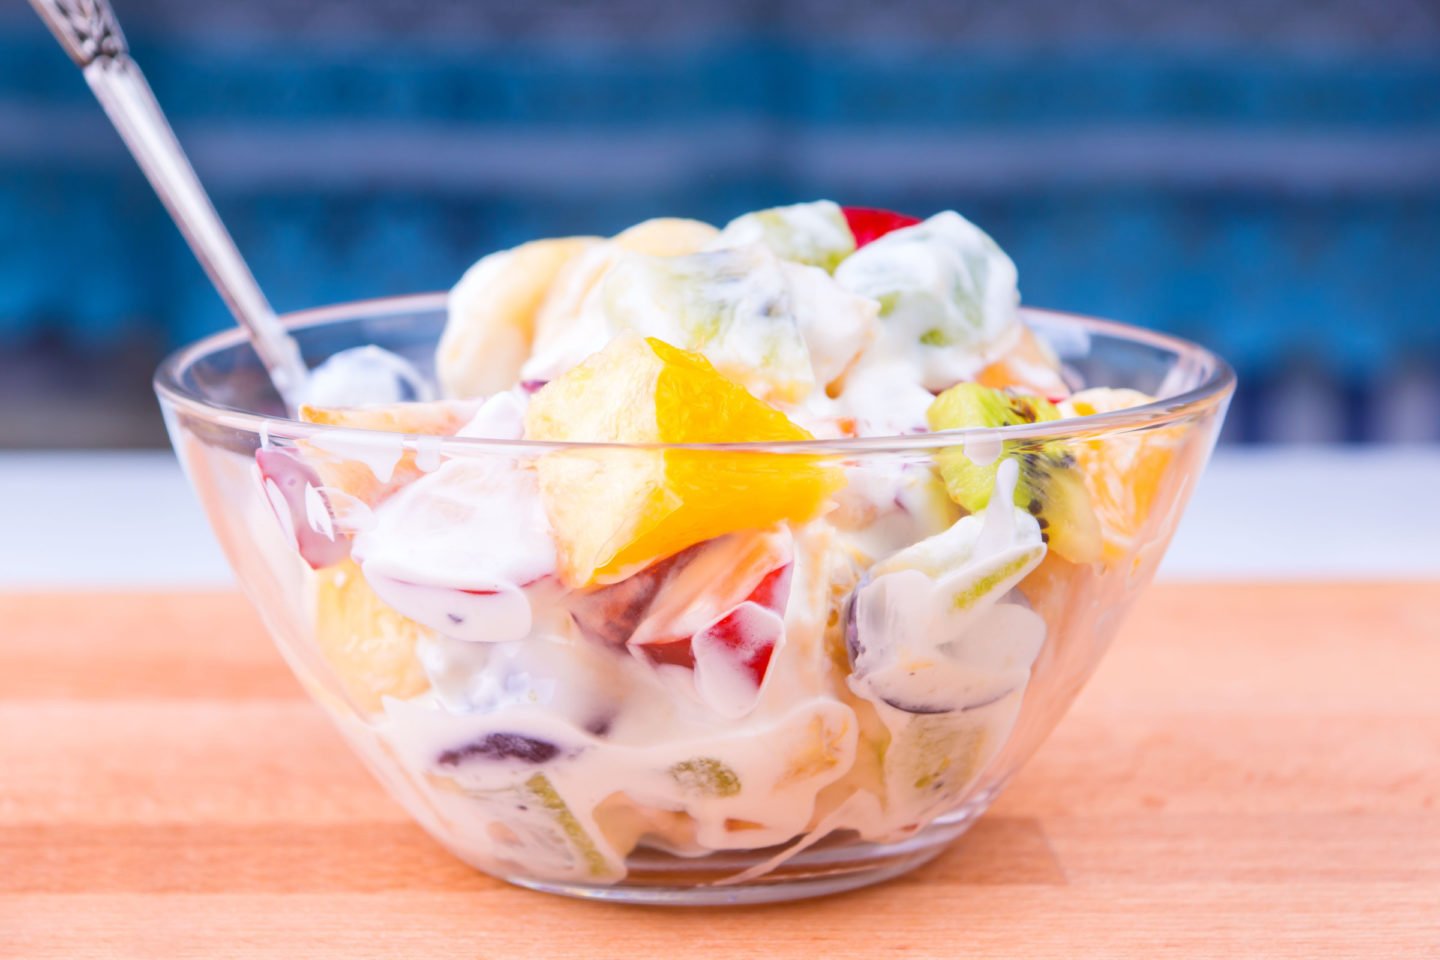 tropical fruit salad covered in yogurt